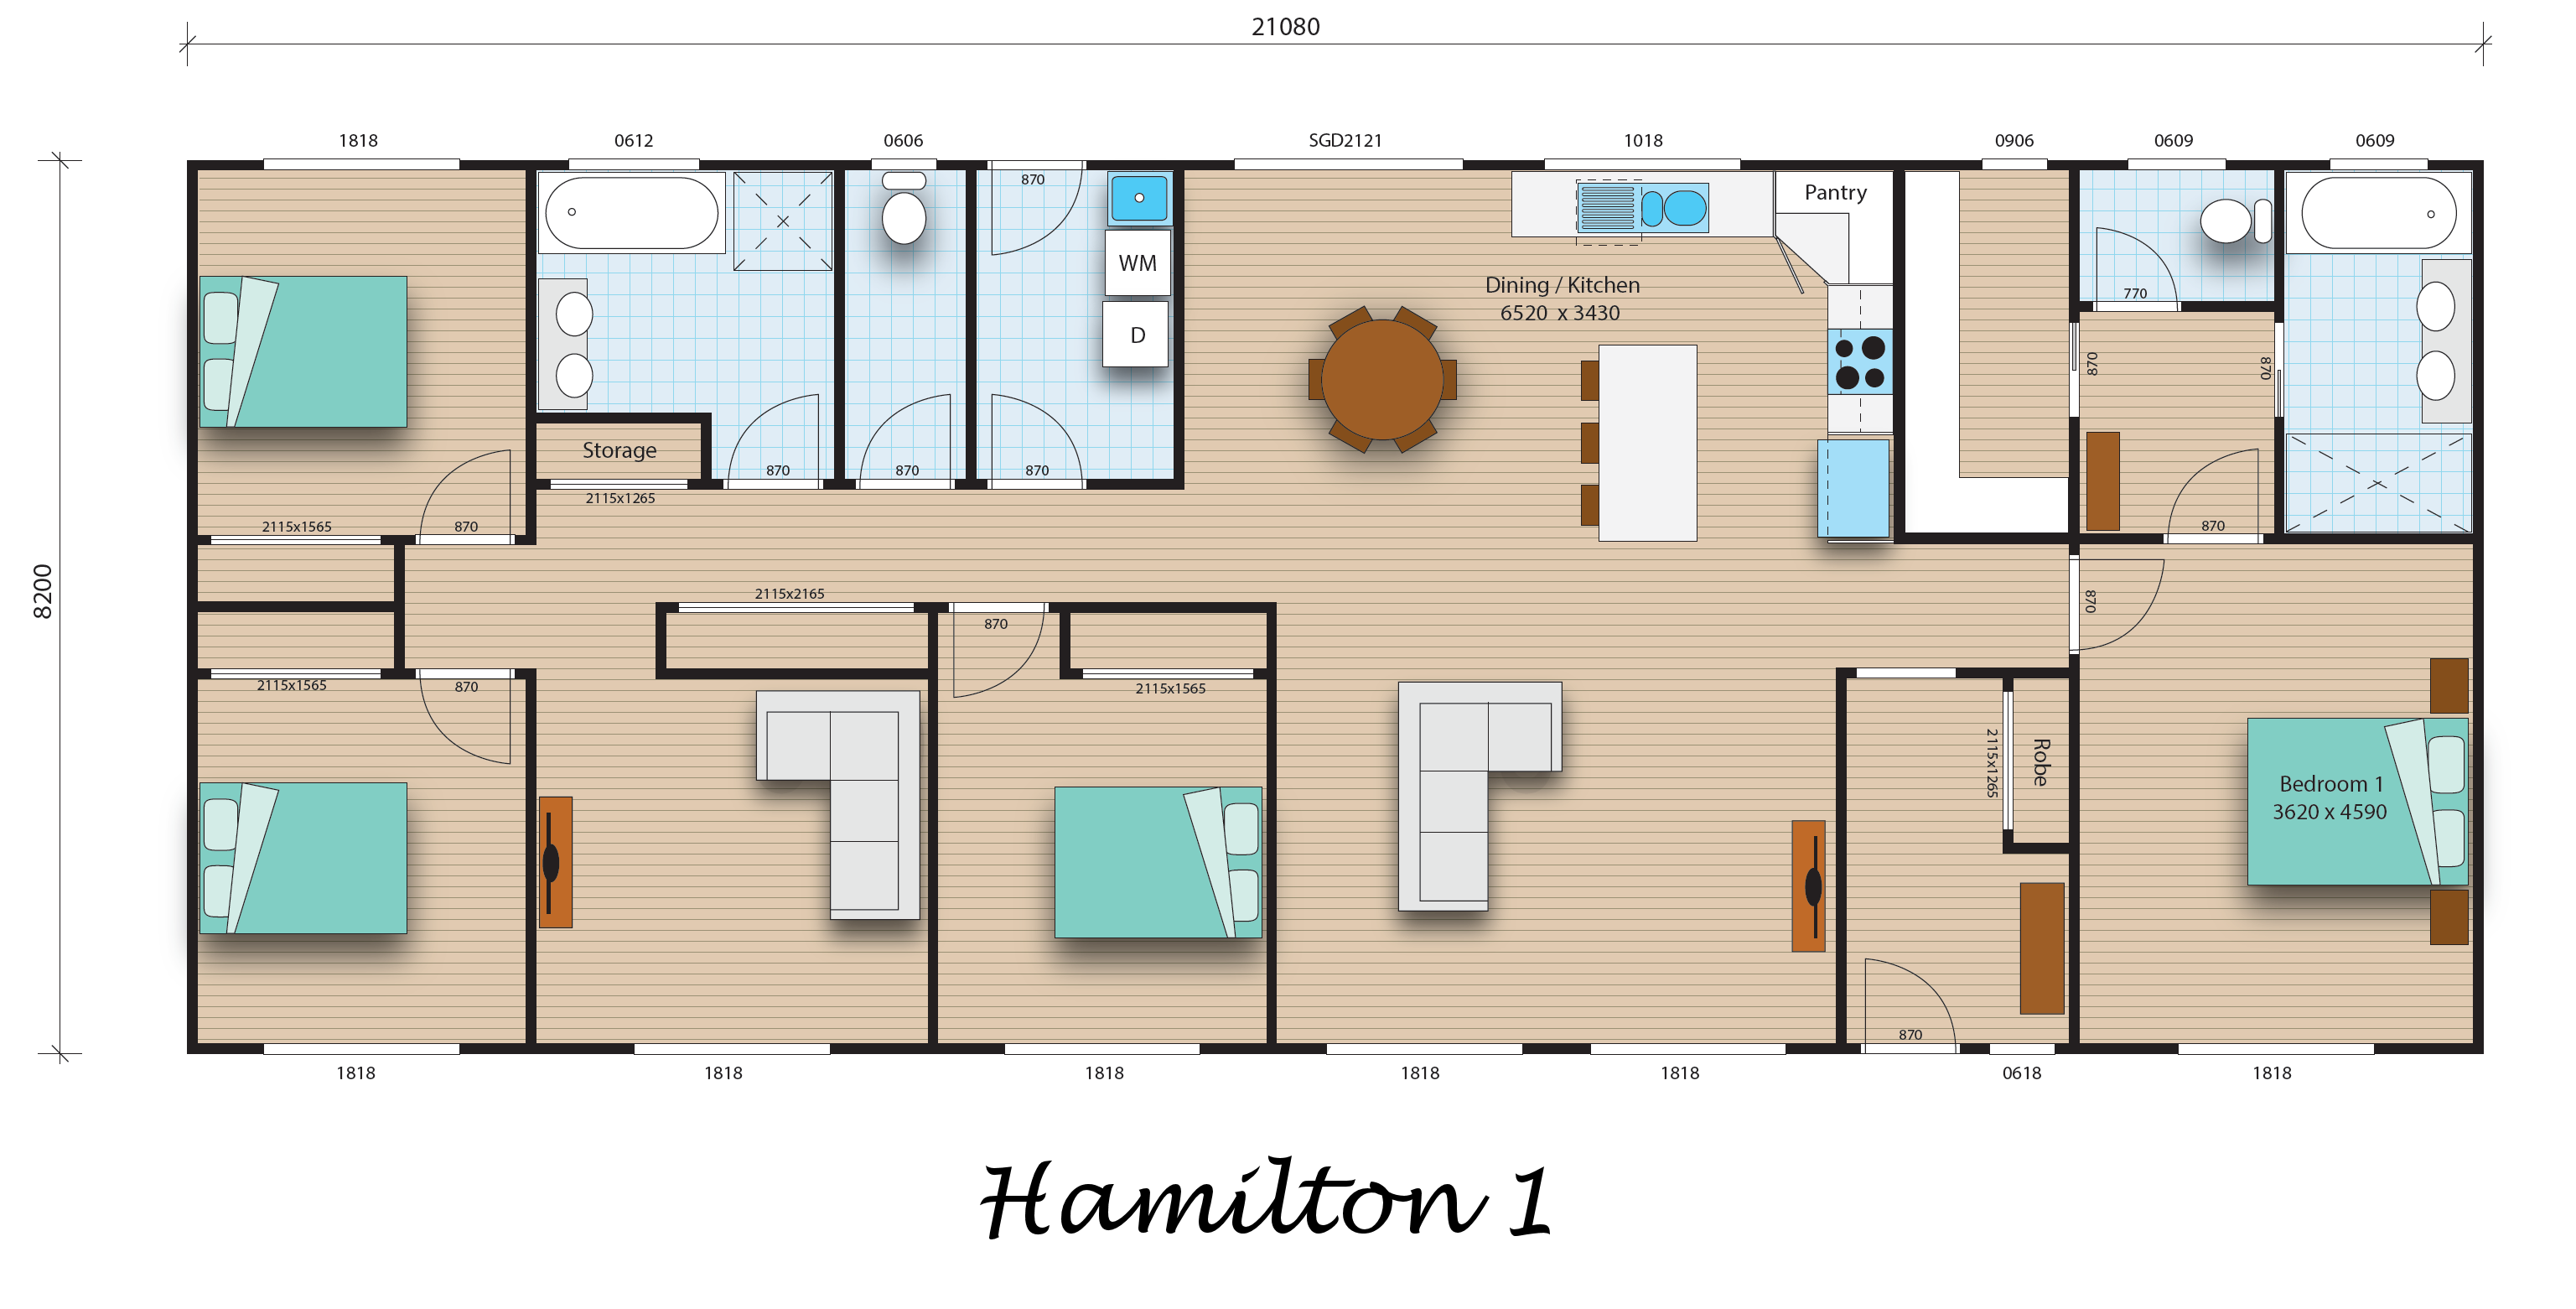 Hamilton 1 floorplan image